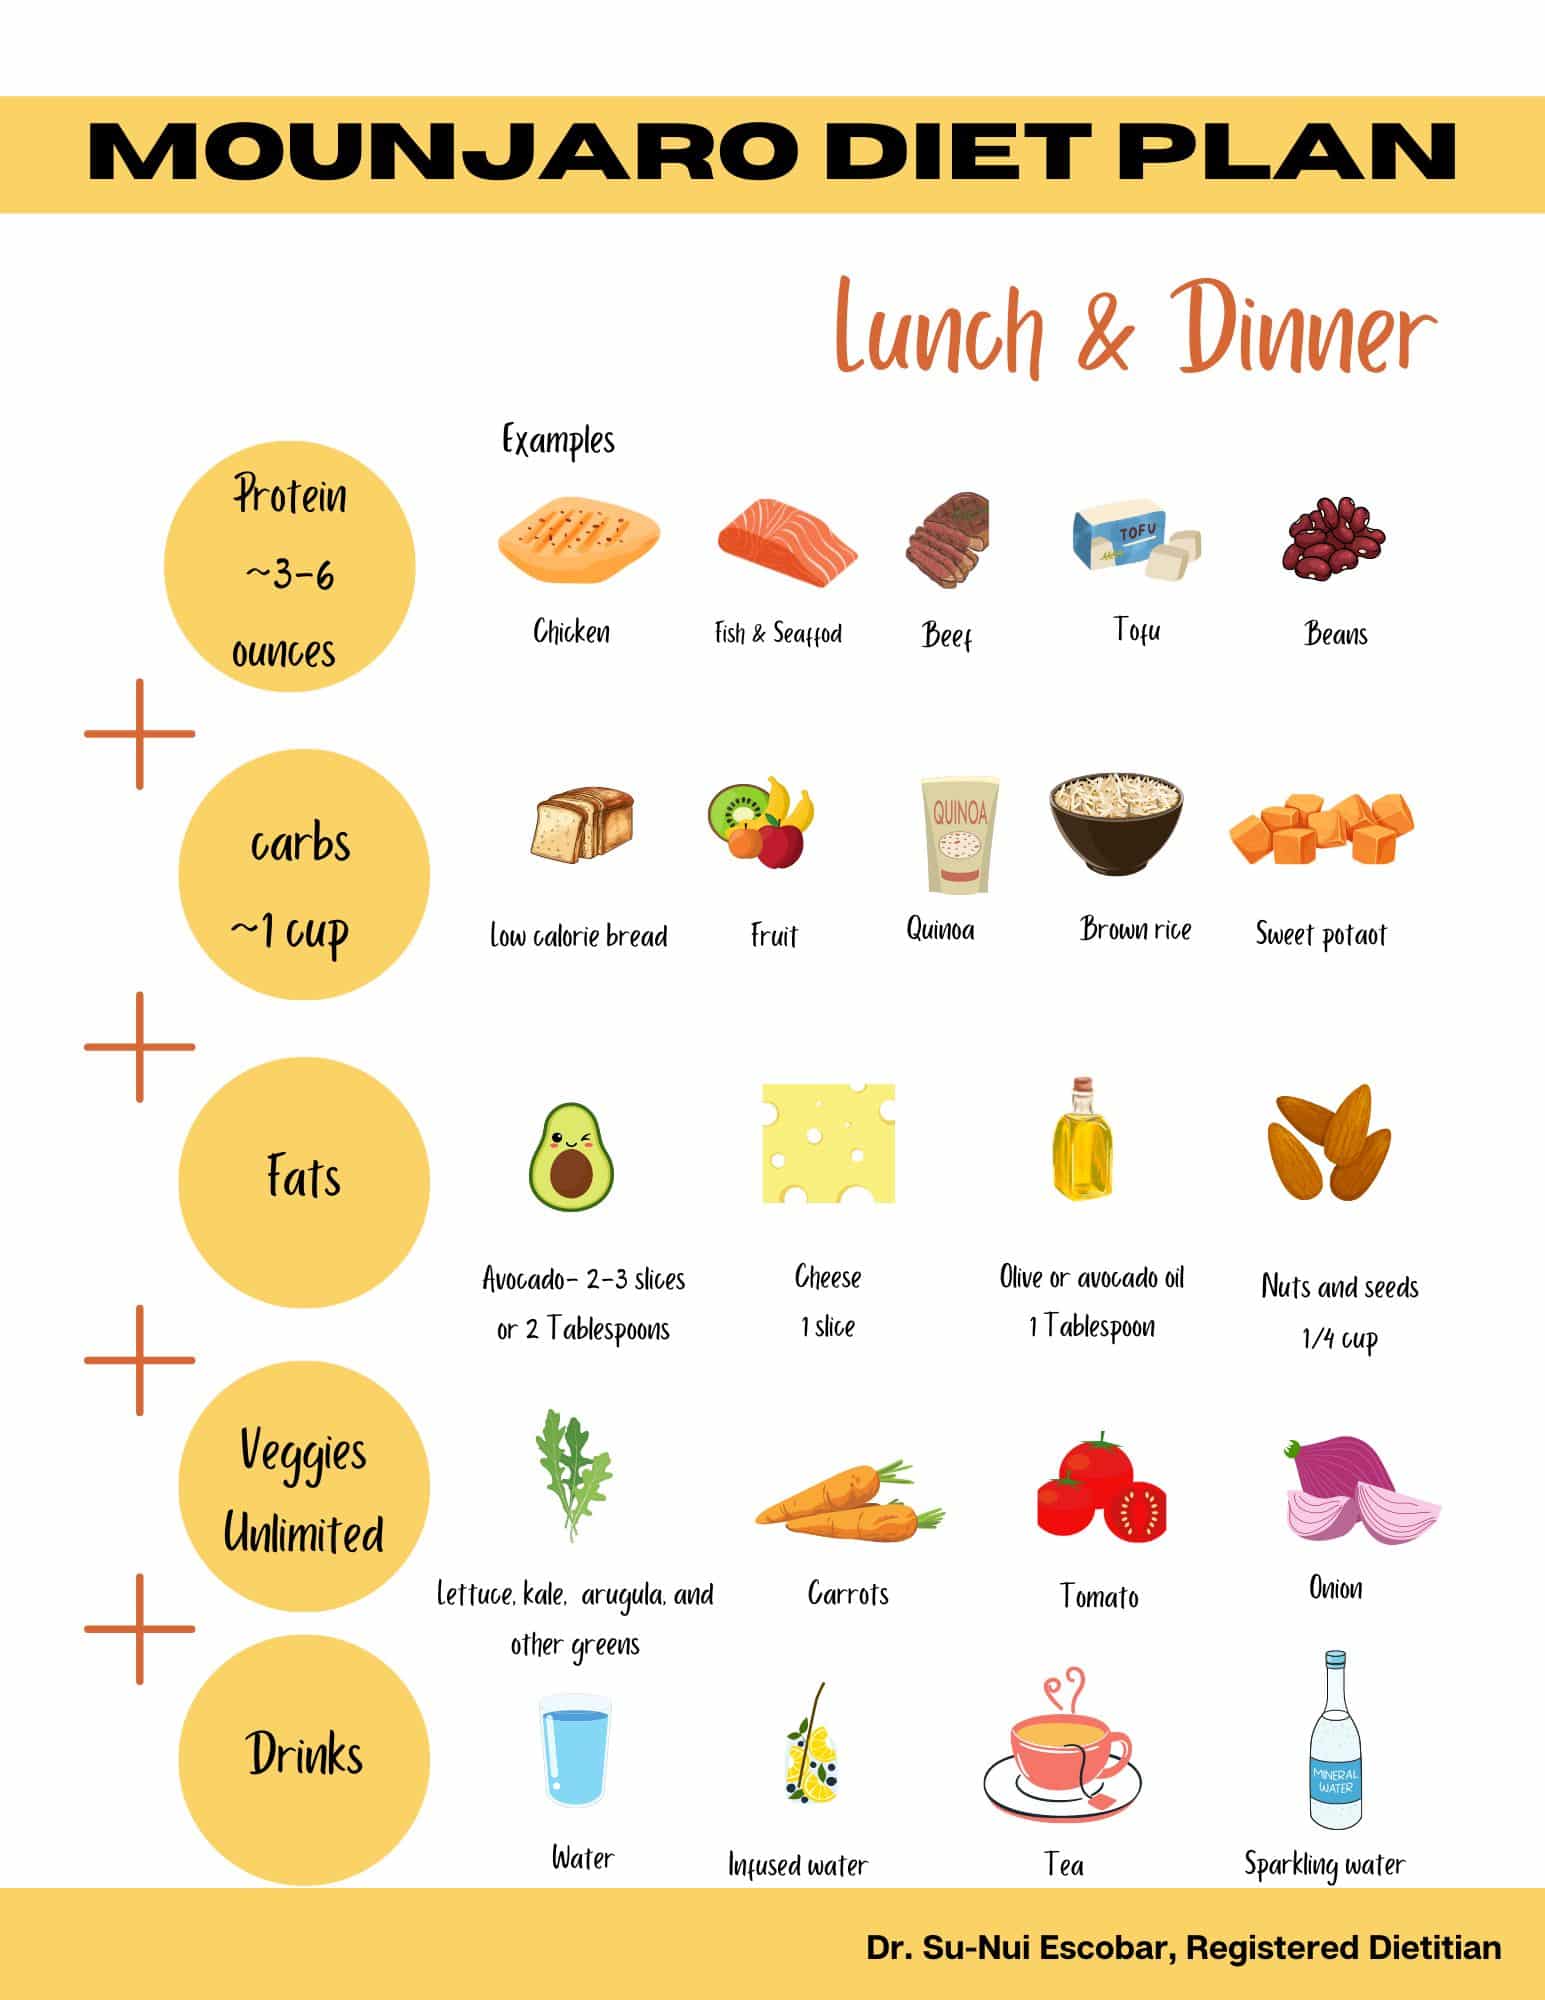 Mounjaro Diet Plan Lunch and Dinner 